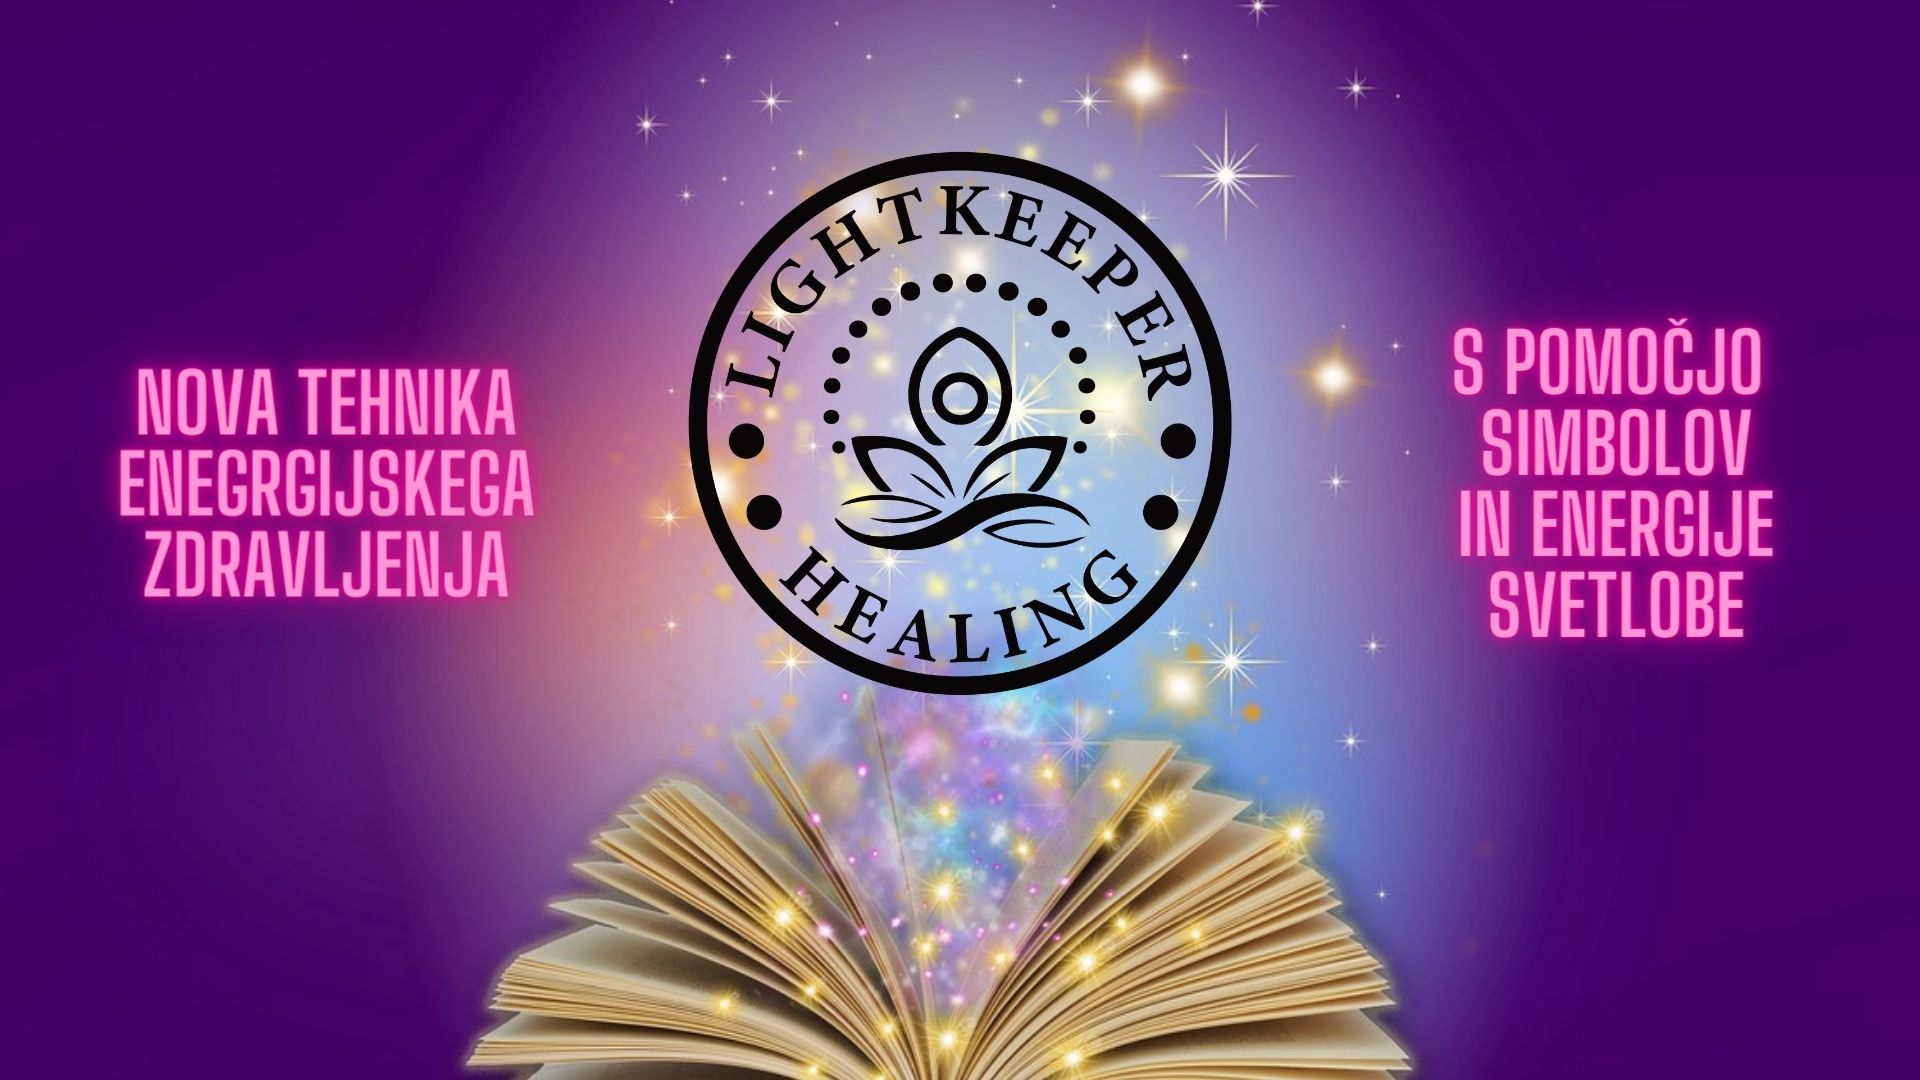 Predstavitev Lightkeeper healing metode 7